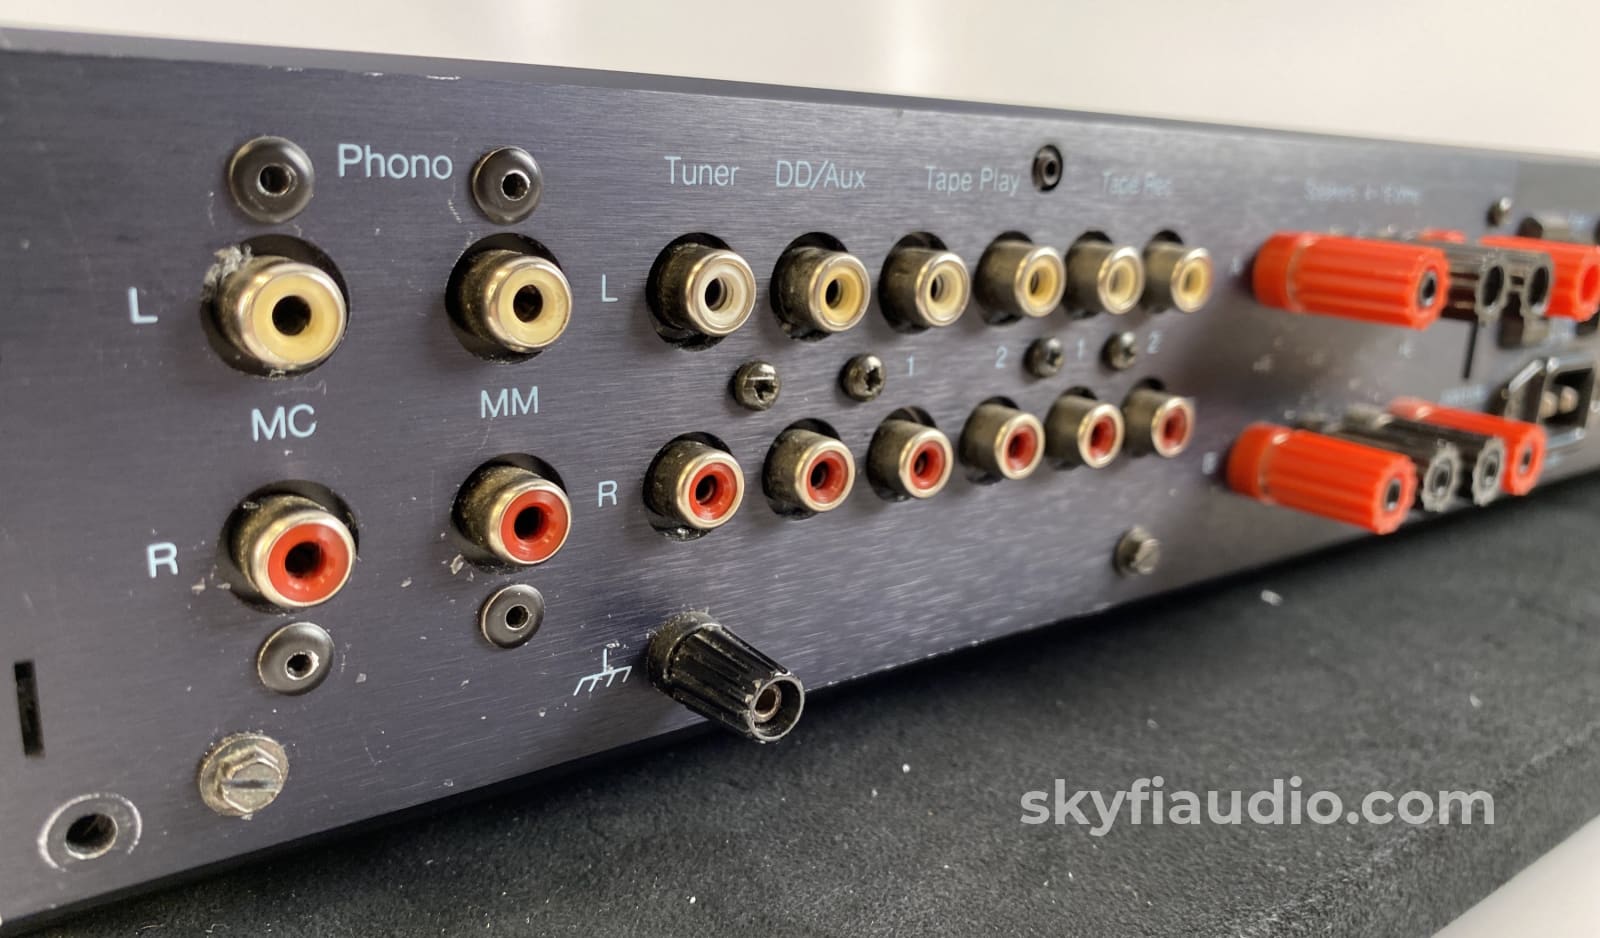 Tandberg Tia 3012 Integrated Amplifier With Phono Input